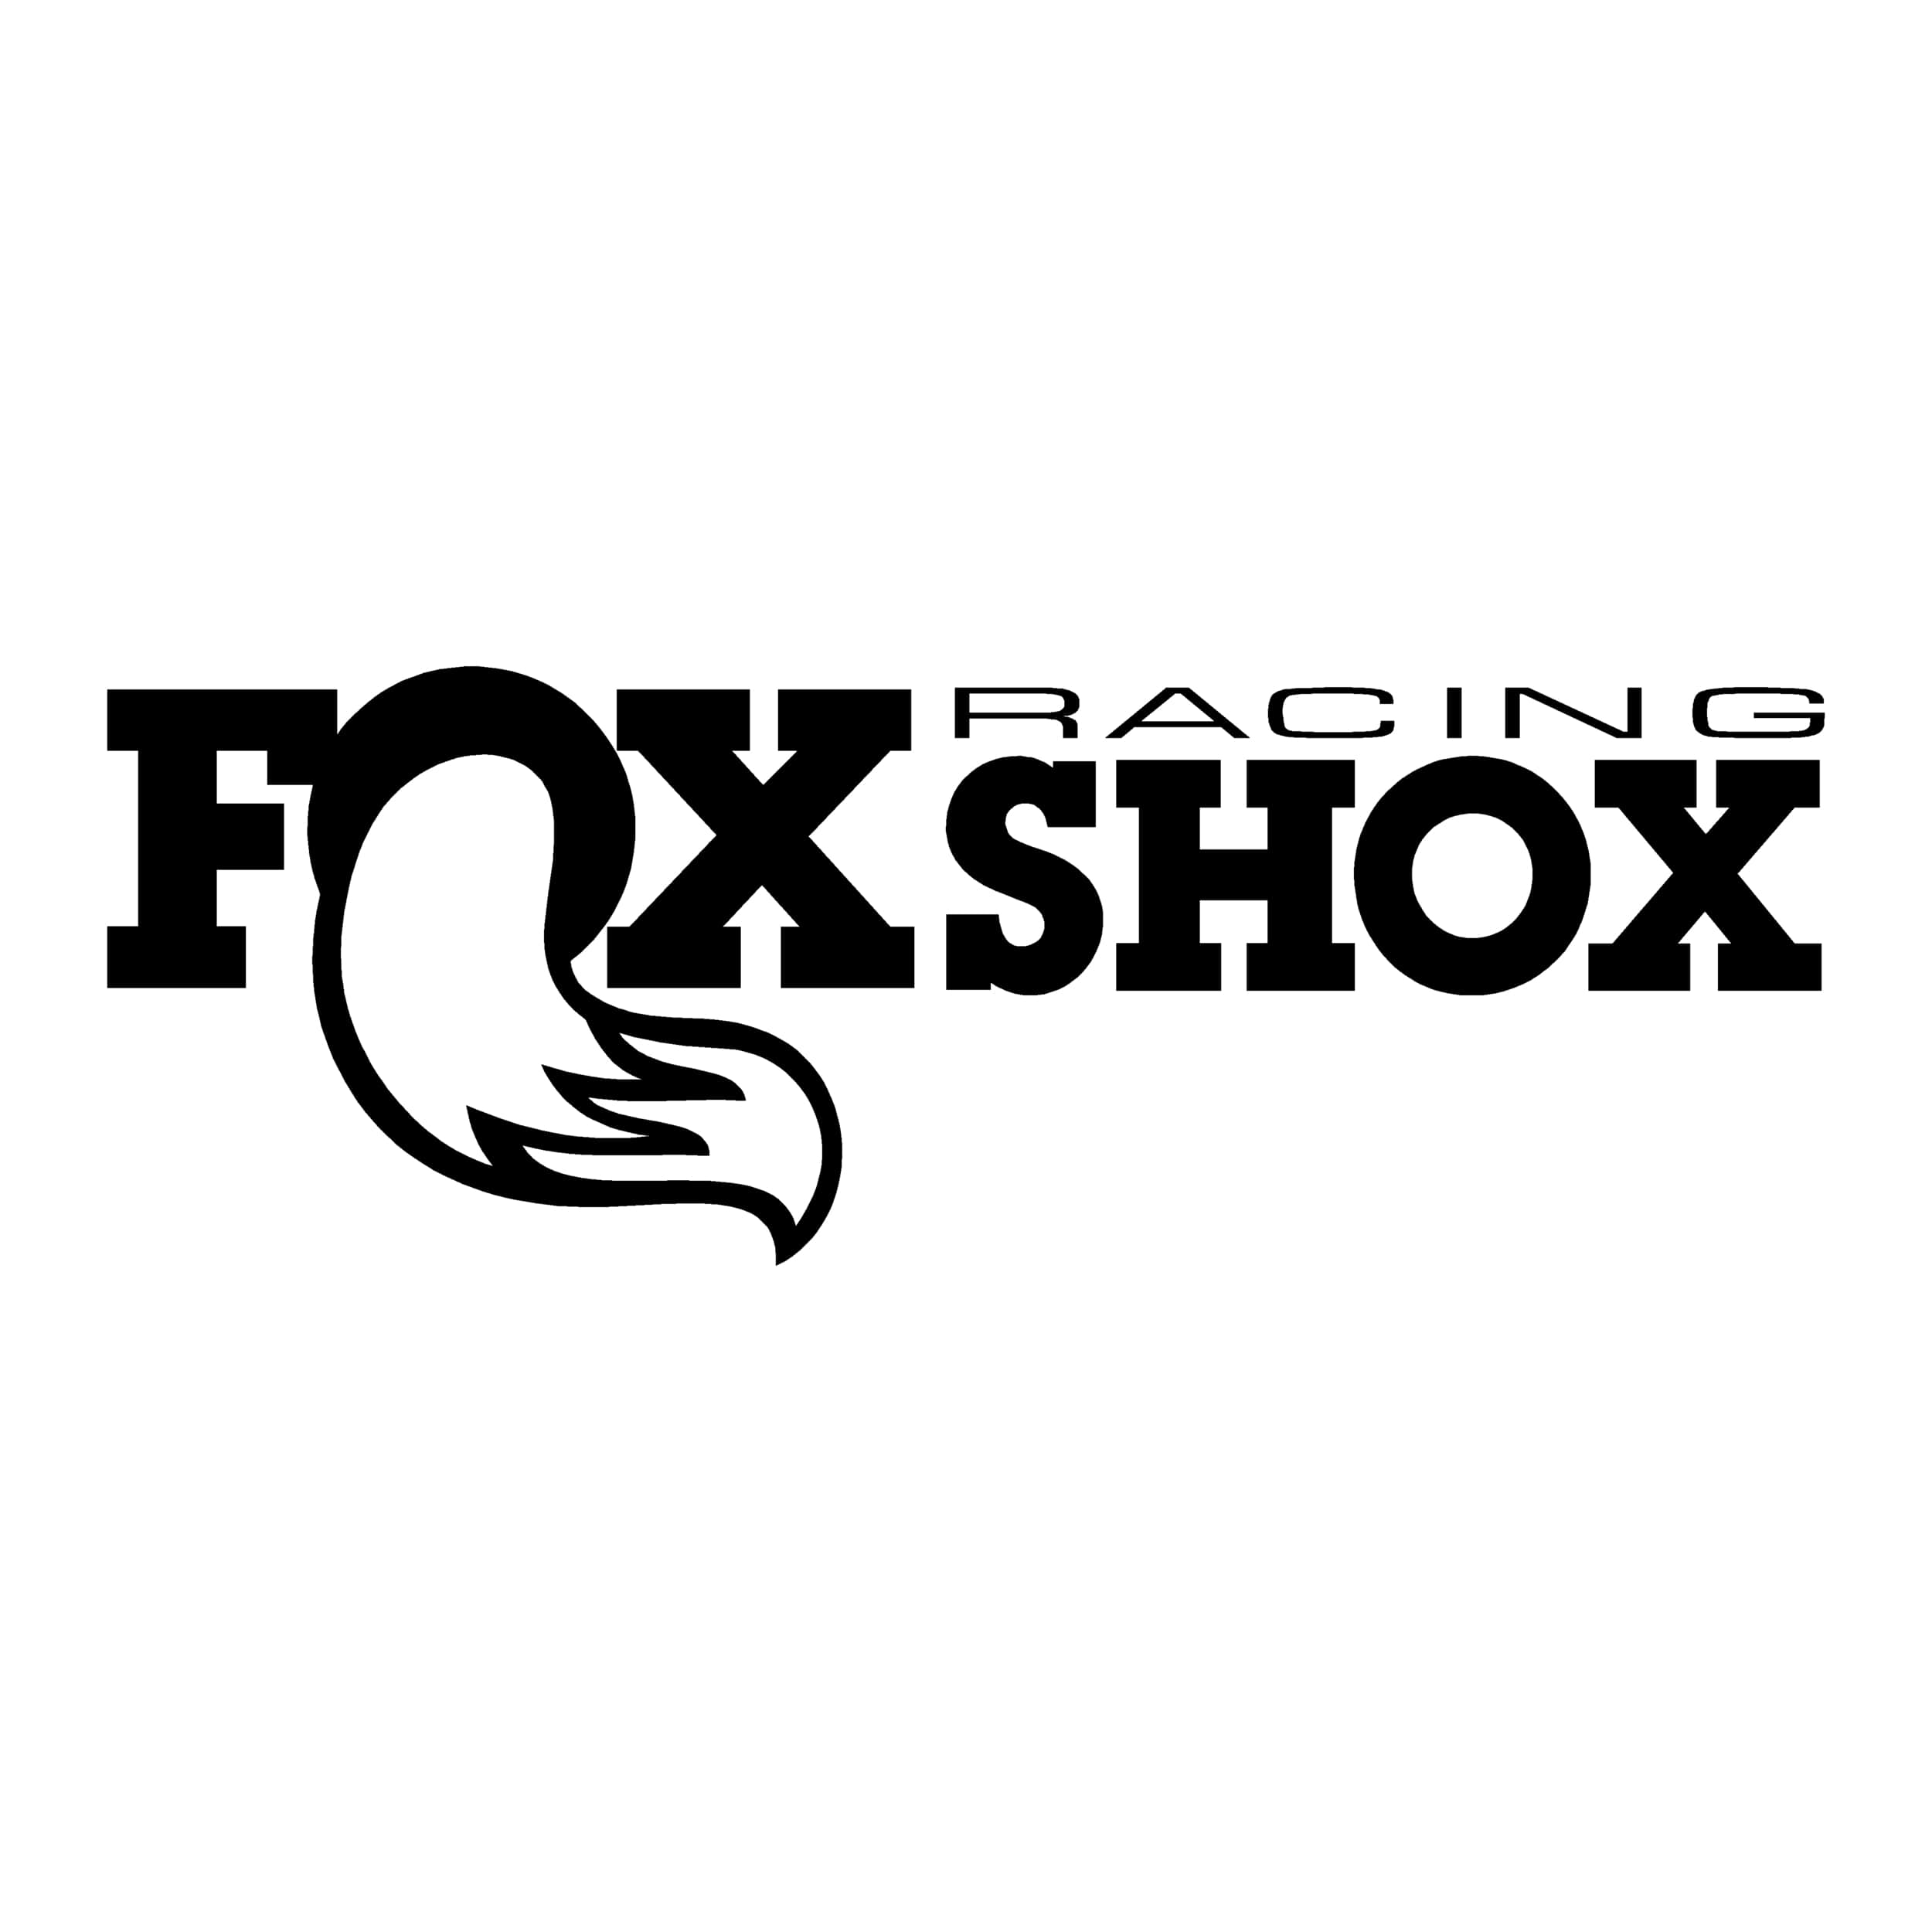 stickers-fox-ref4-tuning-sponsors-autocollant-sticker-velo-bike-auto-moto-4x4-camion-competition-deco-rallye-min